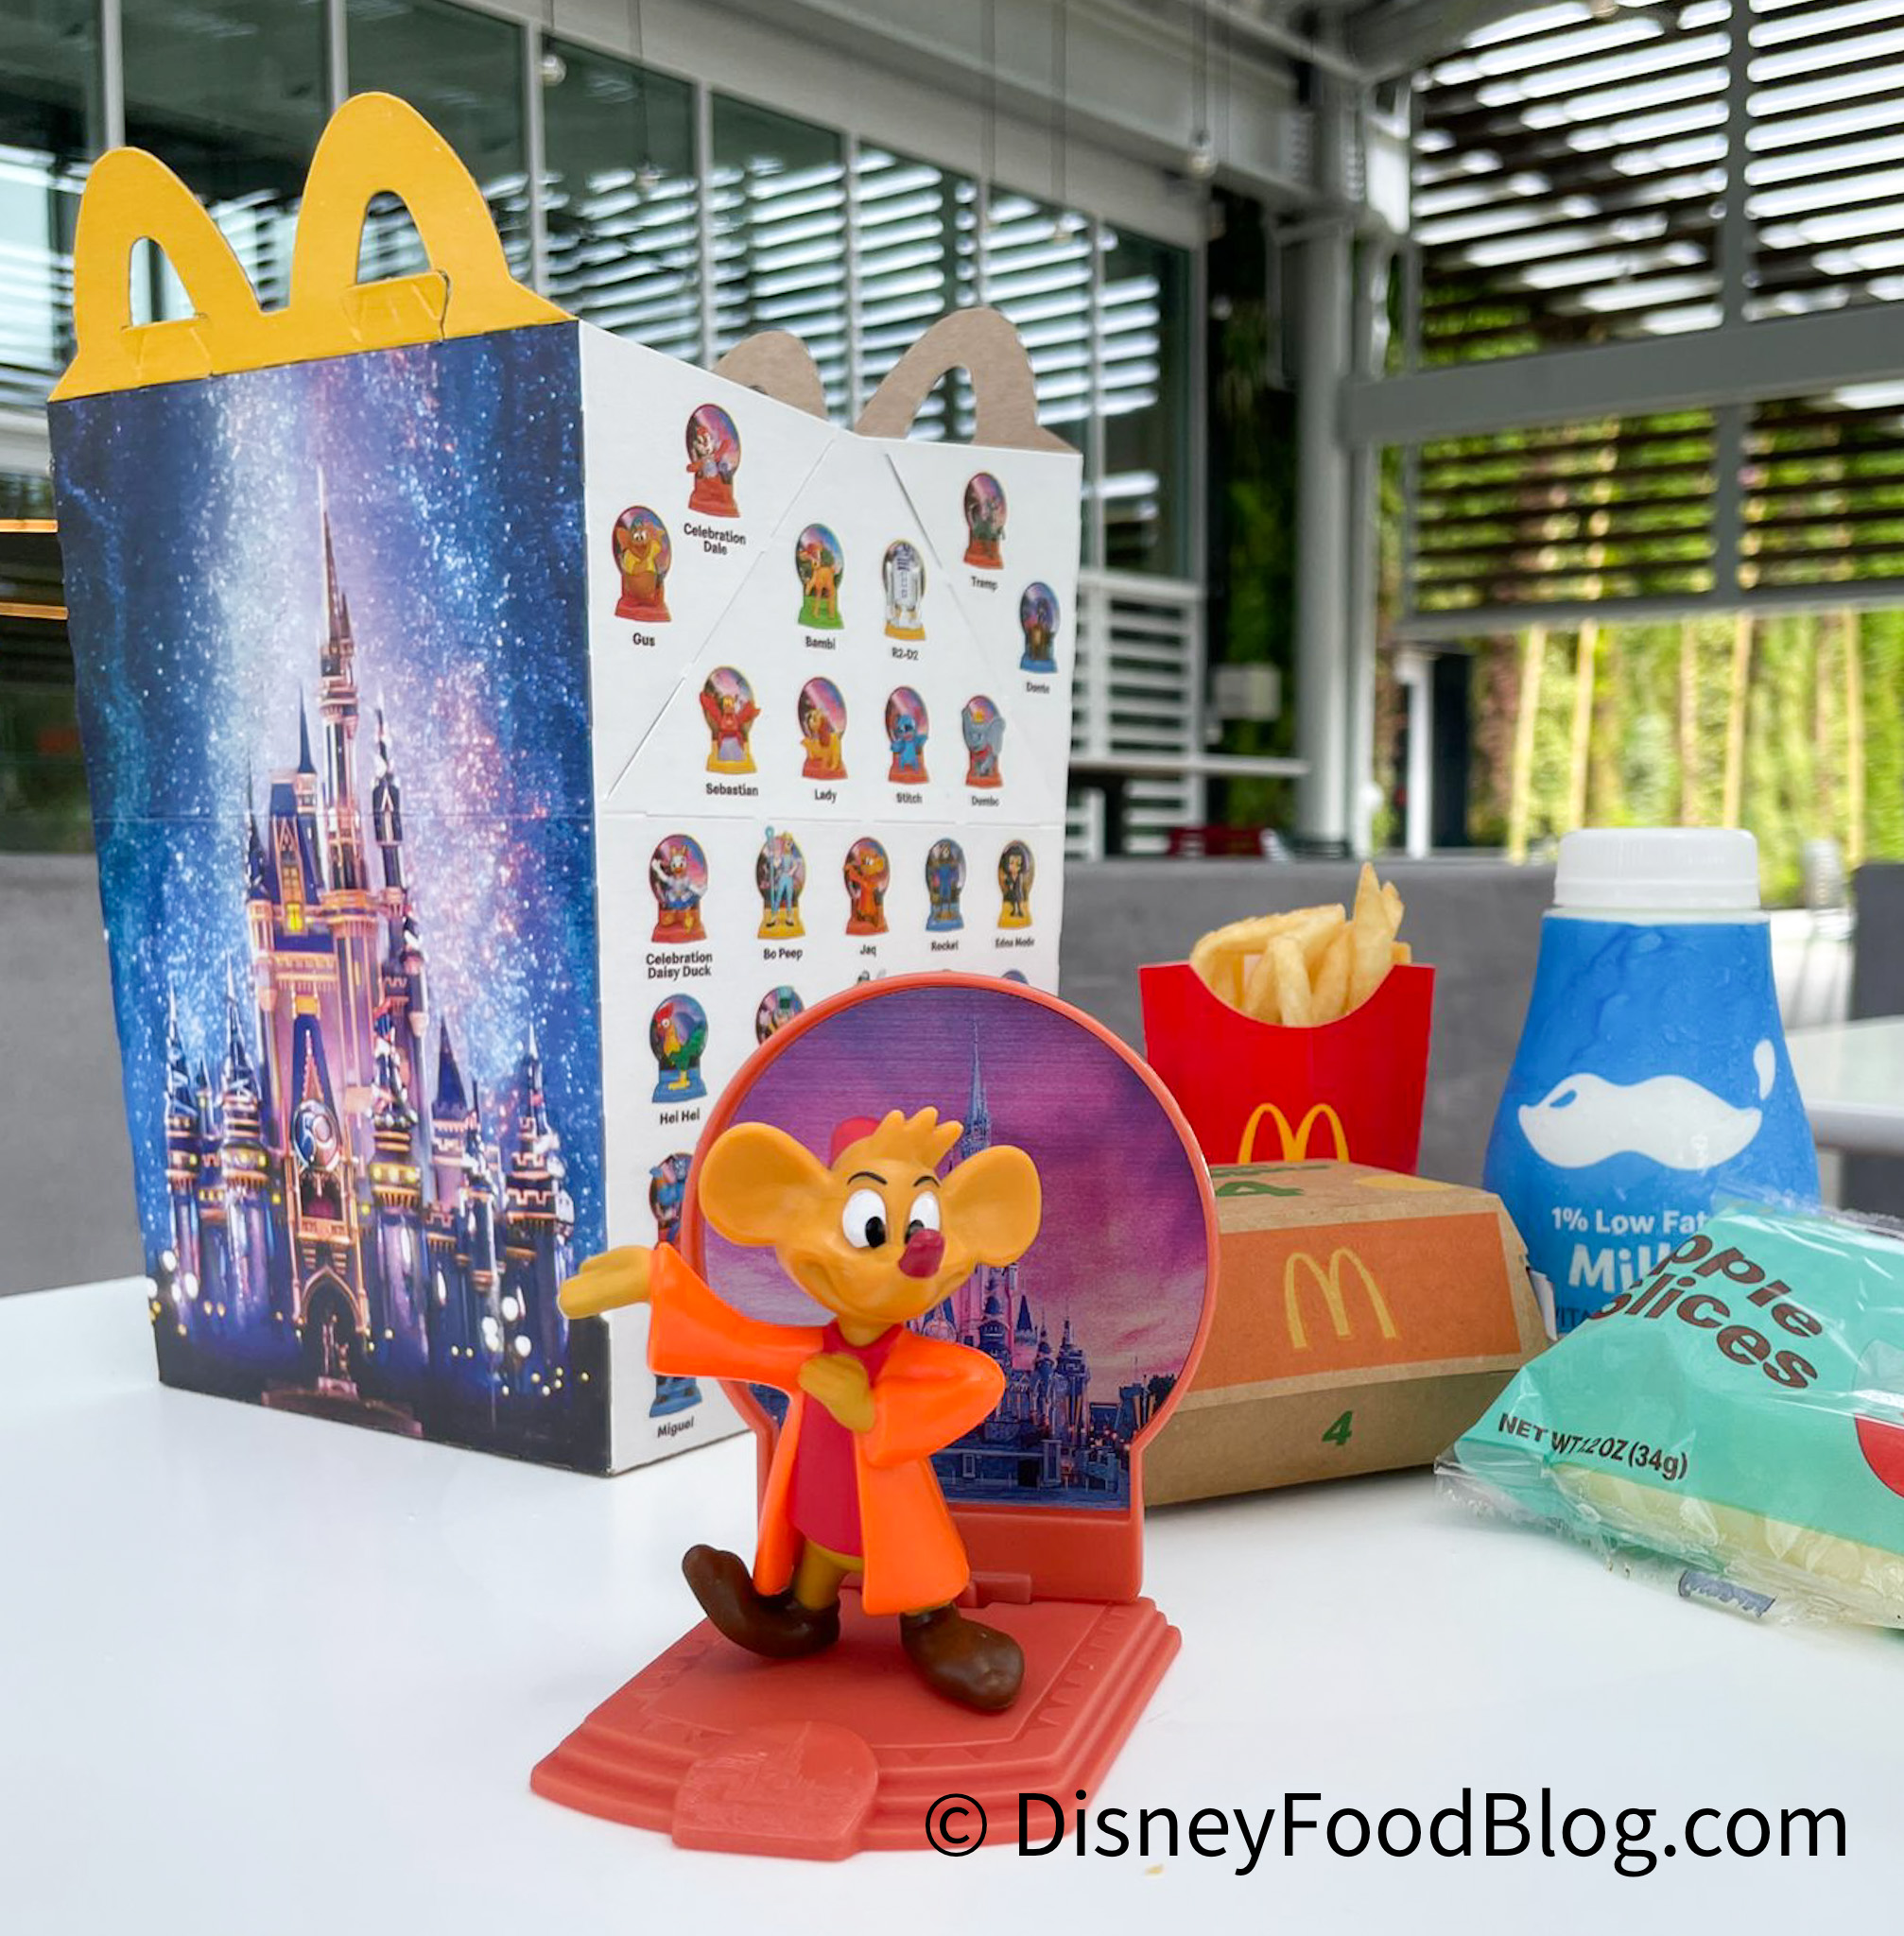 PHOTOS: McDonald's Launches New Disney World 50th Anniversary